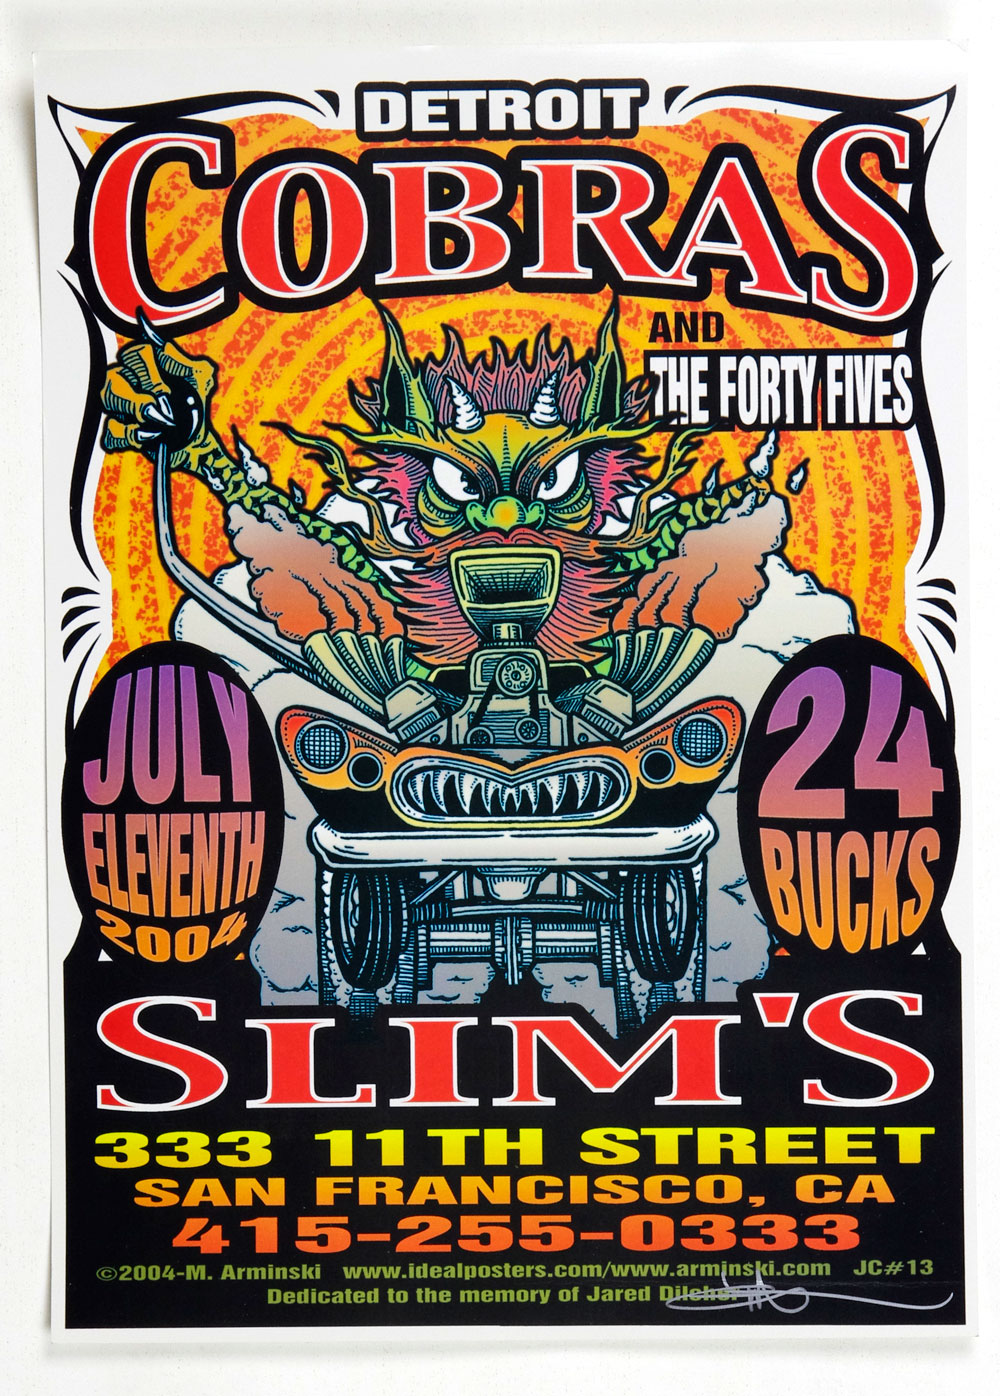 Detroit Cobras Poster 2004 Jul 11 Slim's San Francisco Mark Arminski Signed